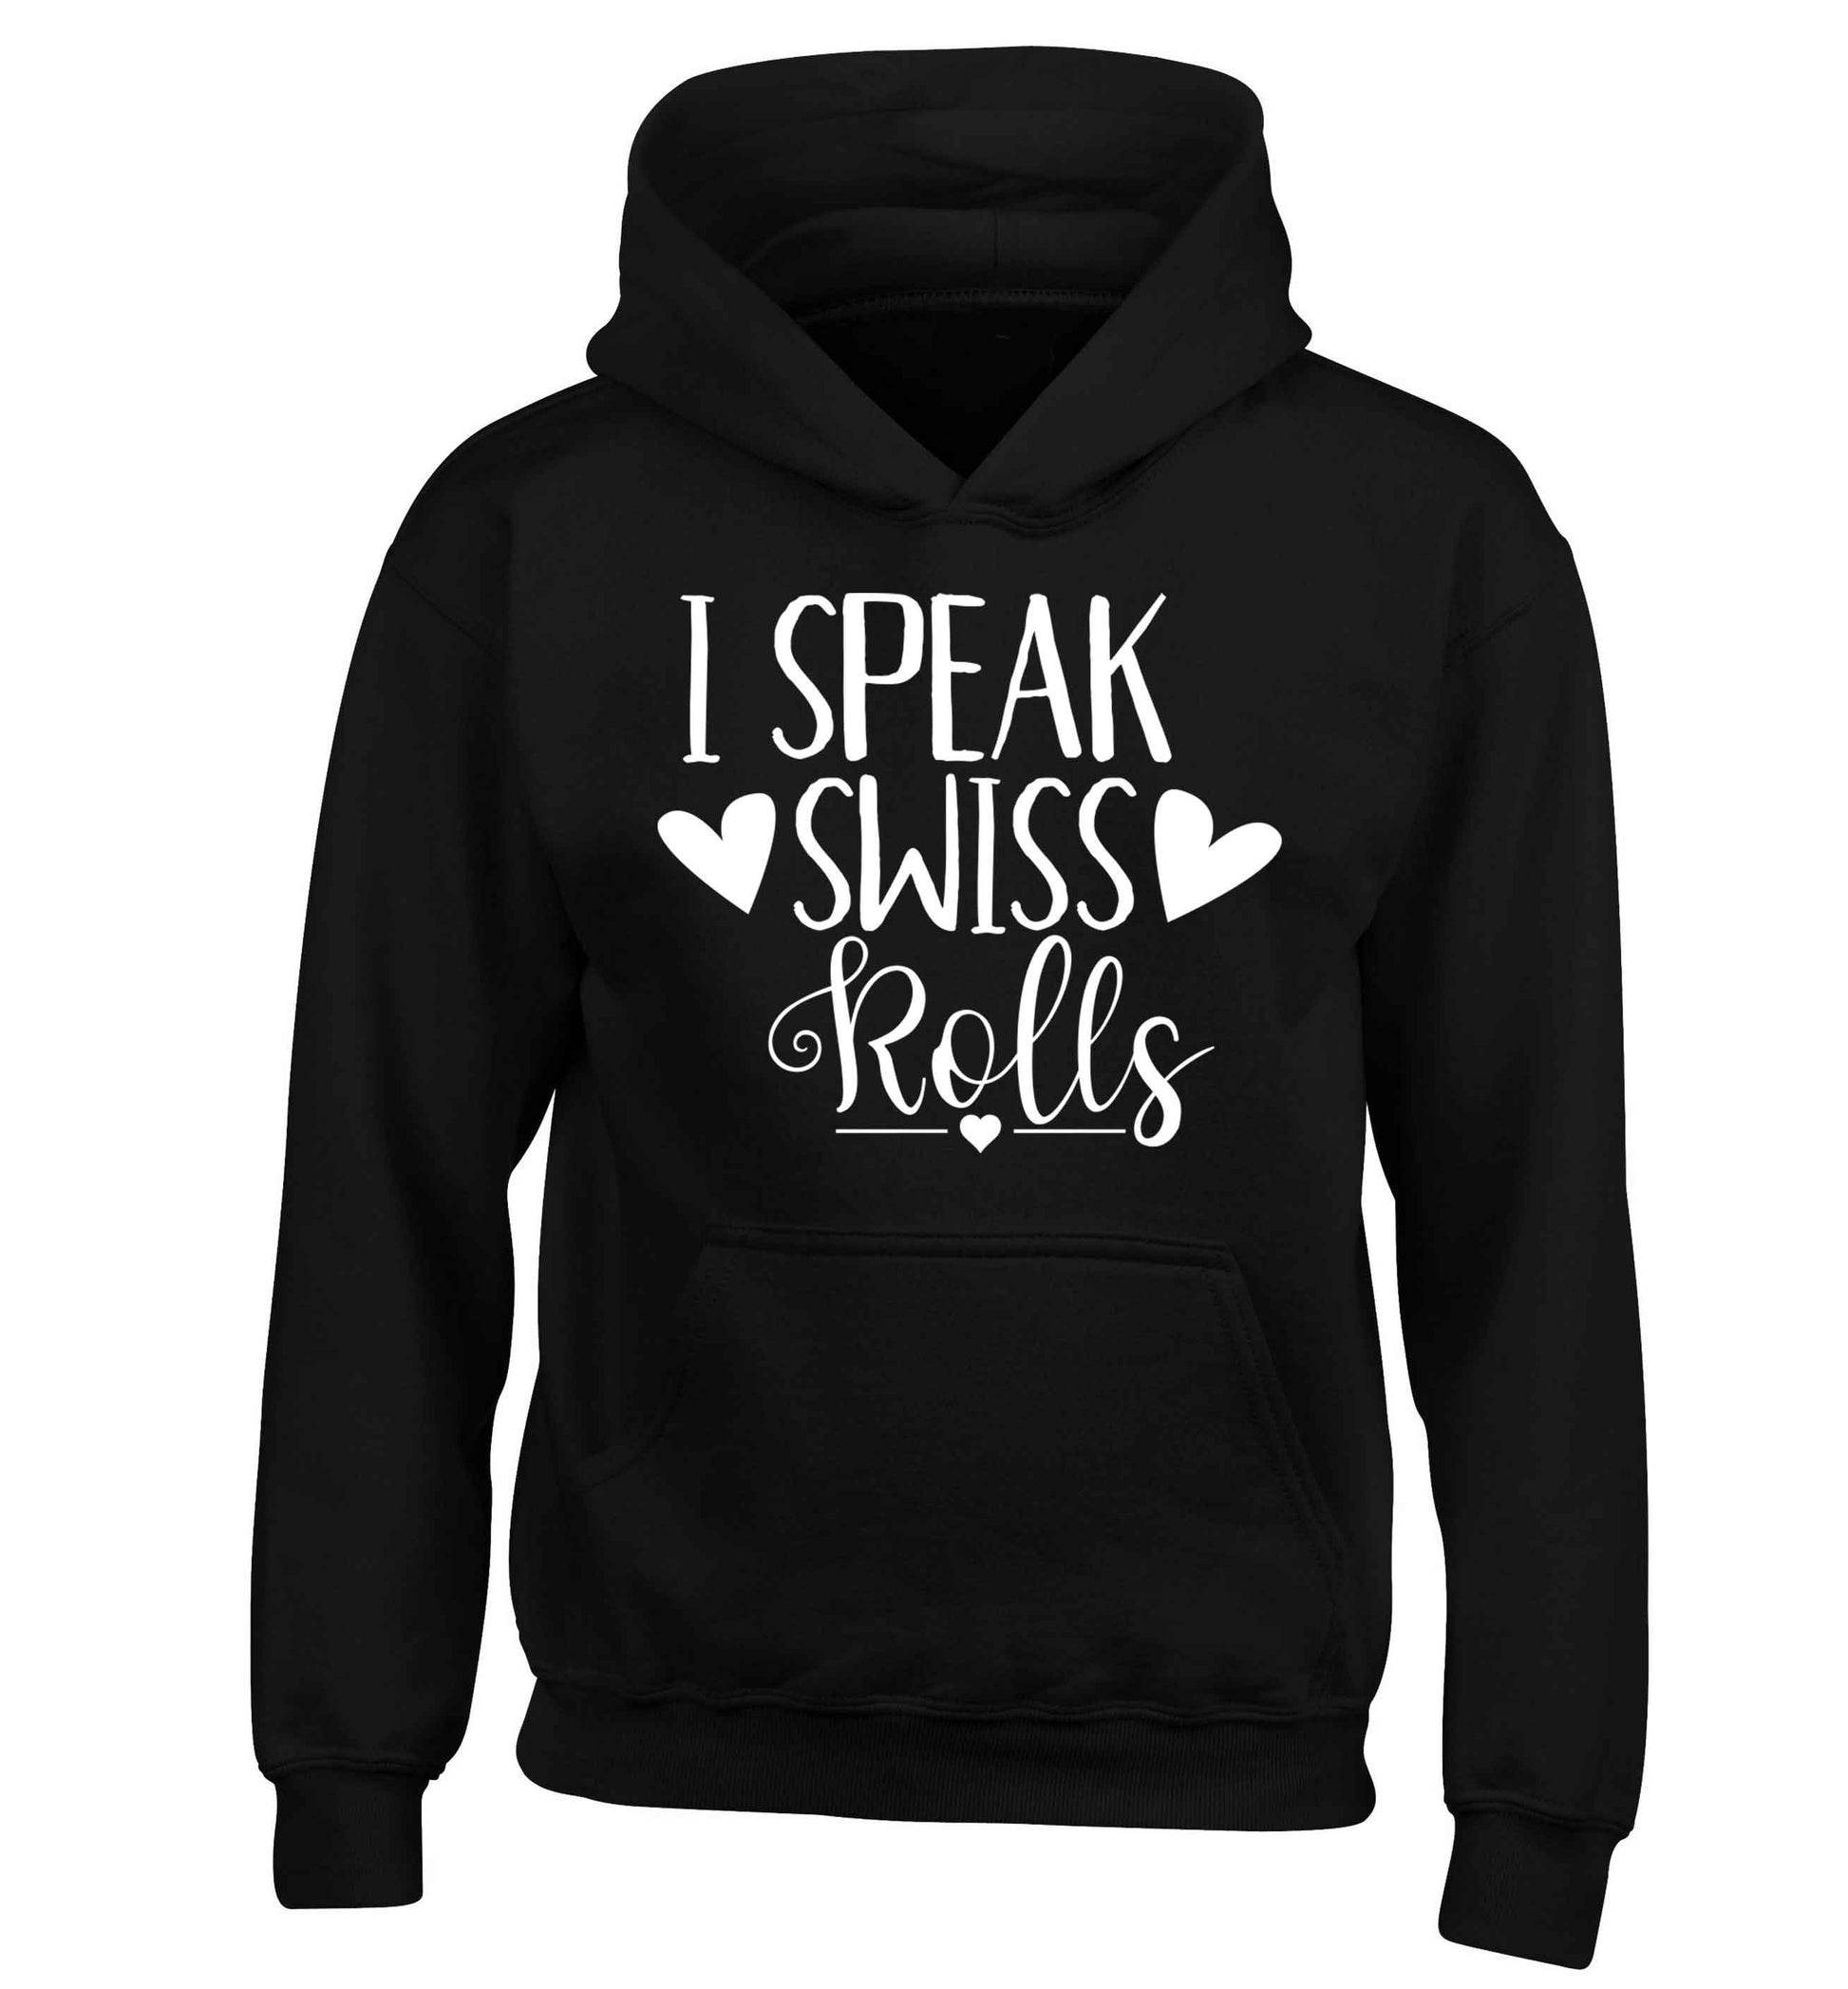 I speak swiss..rolls children's black hoodie 12-13 Years